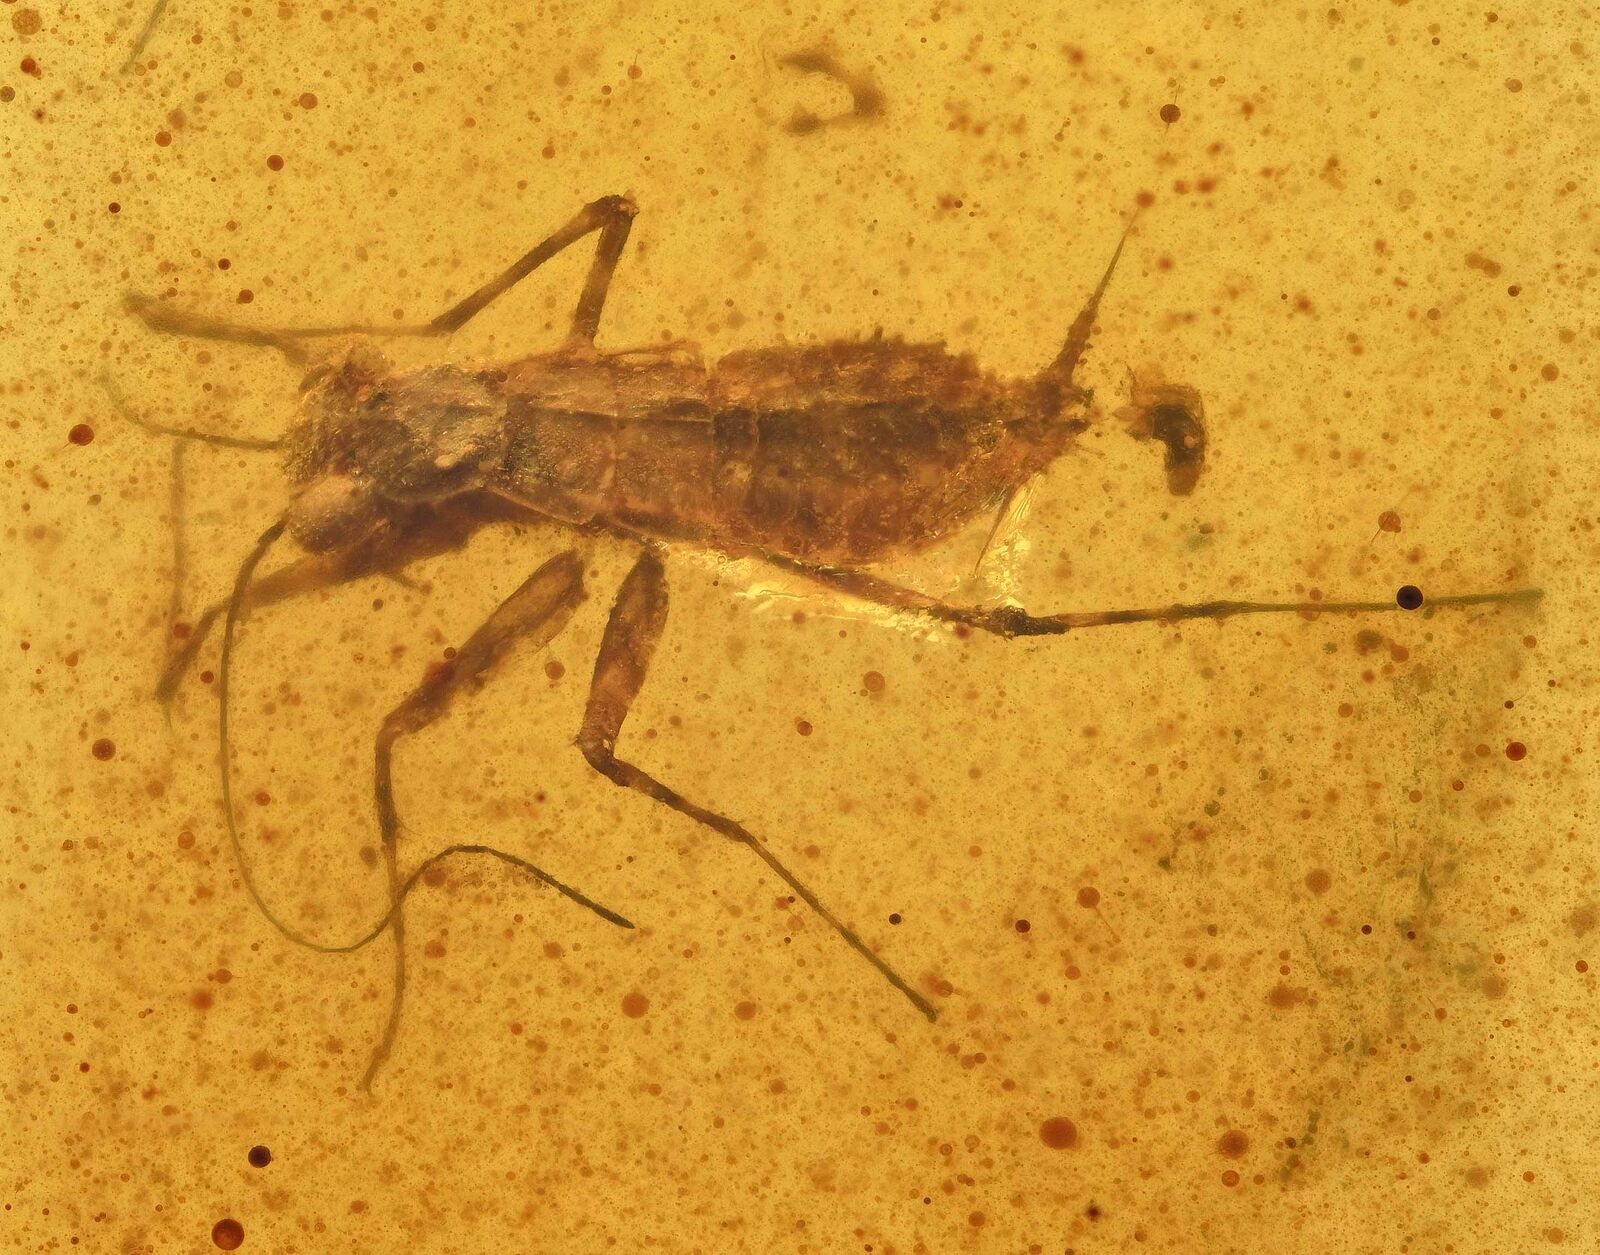 Rare Juvenile Mantodea (Praying Mantis), Fossil Inclusion in Burmese Amber